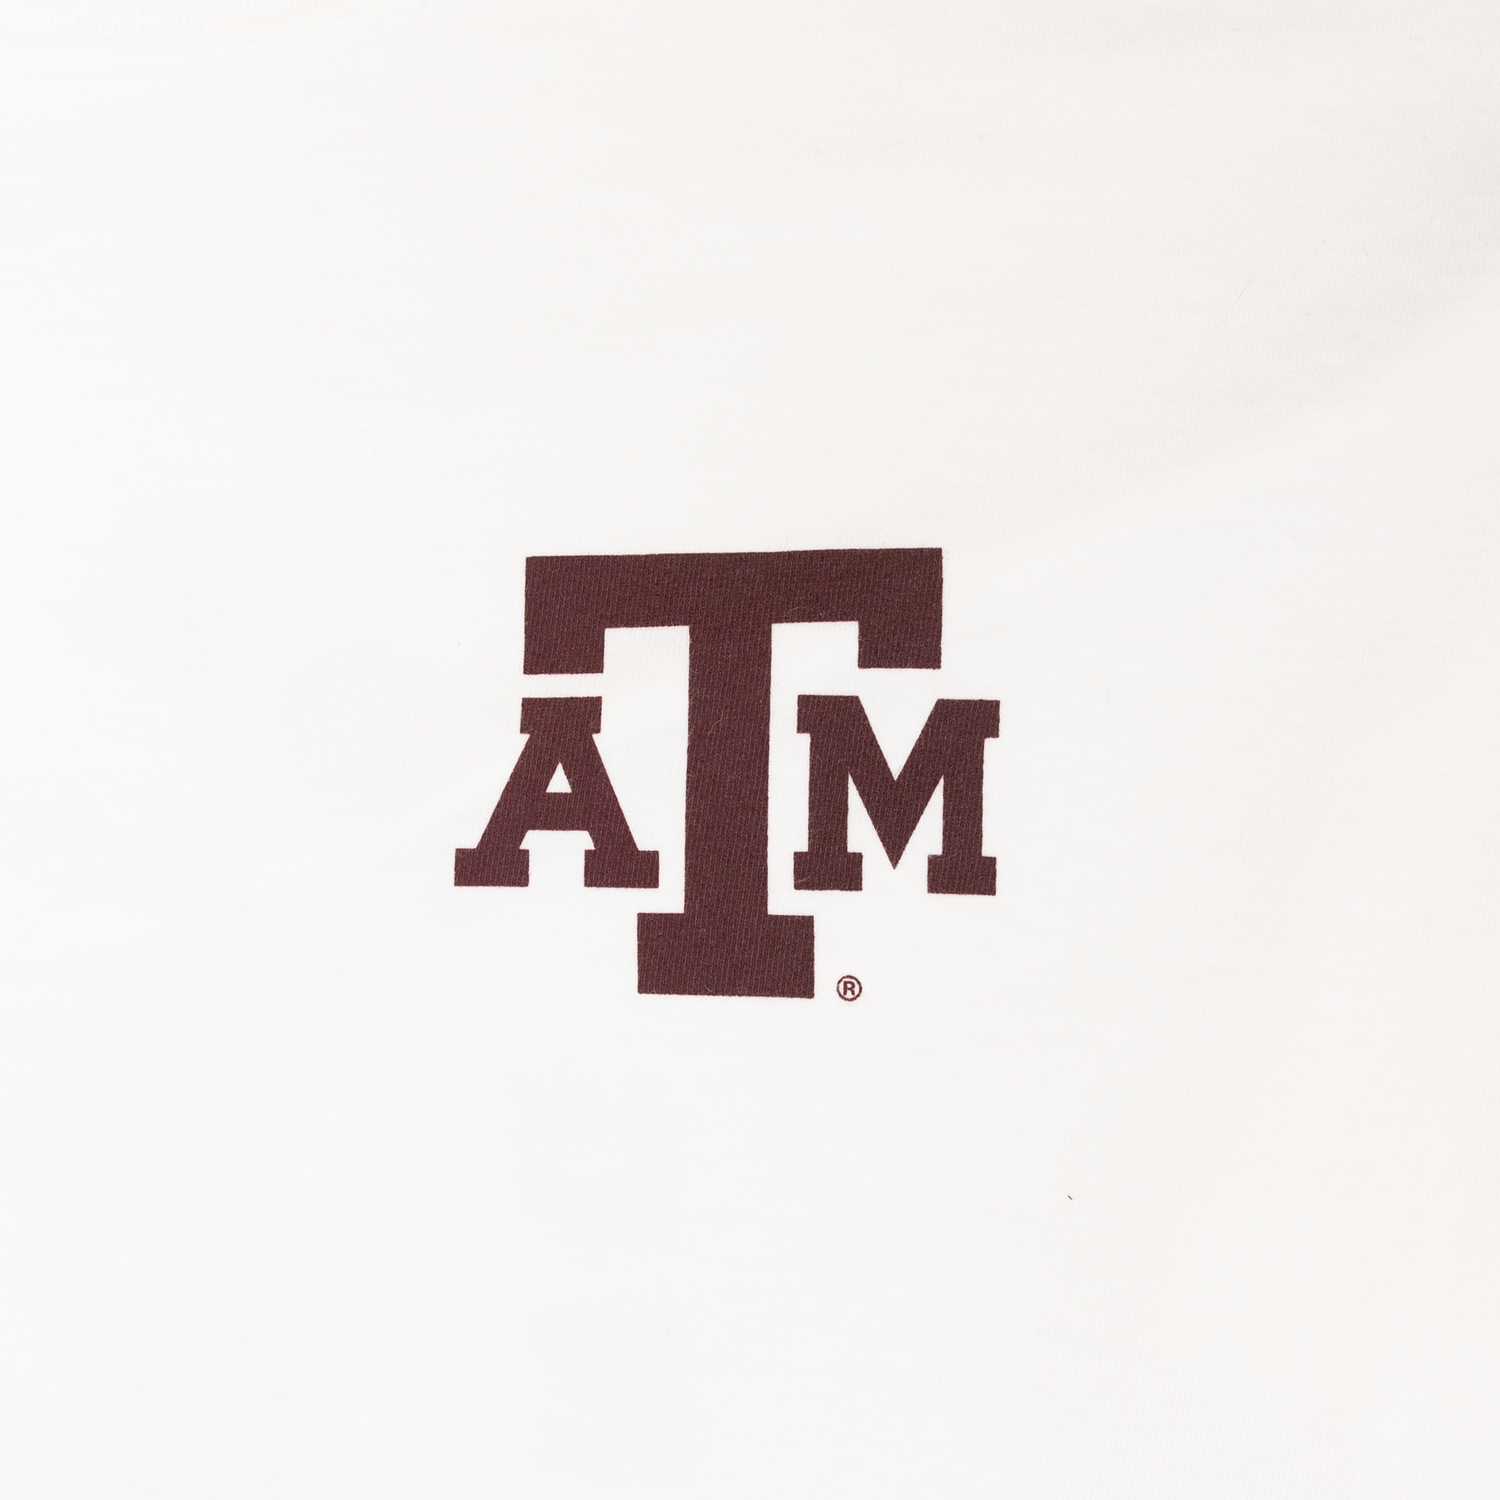 Texas A&M Aggie Baseball Swing for the Tracks White T-Shirt